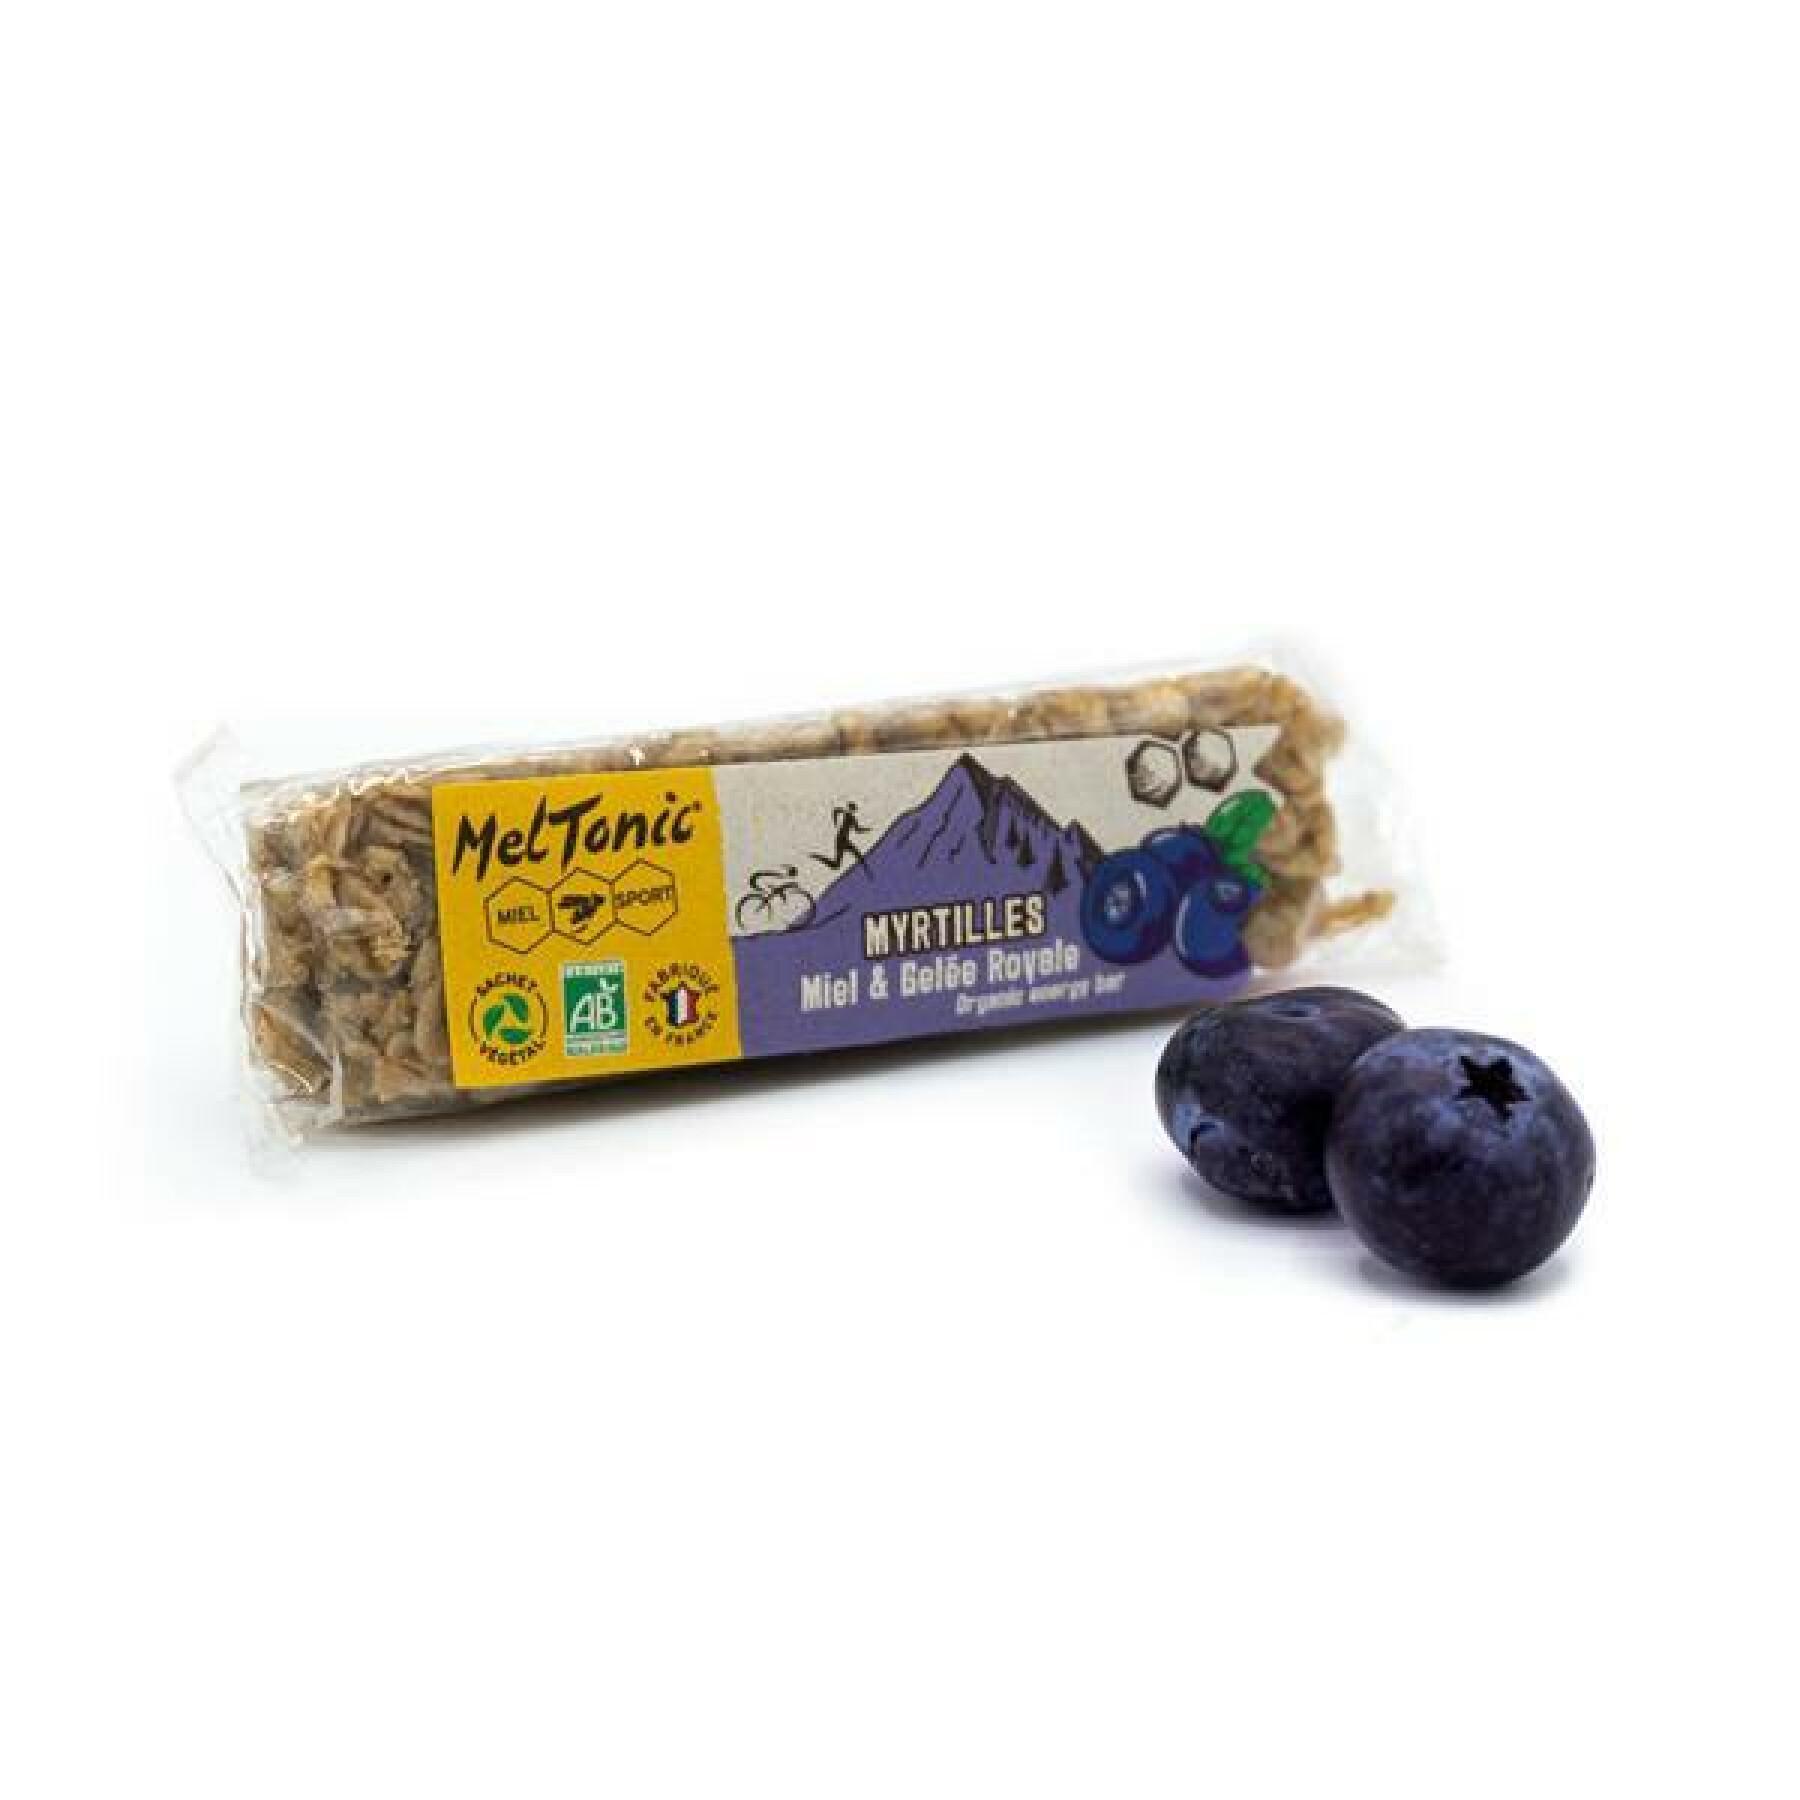 Box of 20 organic cereal nutrition bars blueberries & hazelnuts Meltonic 30 g